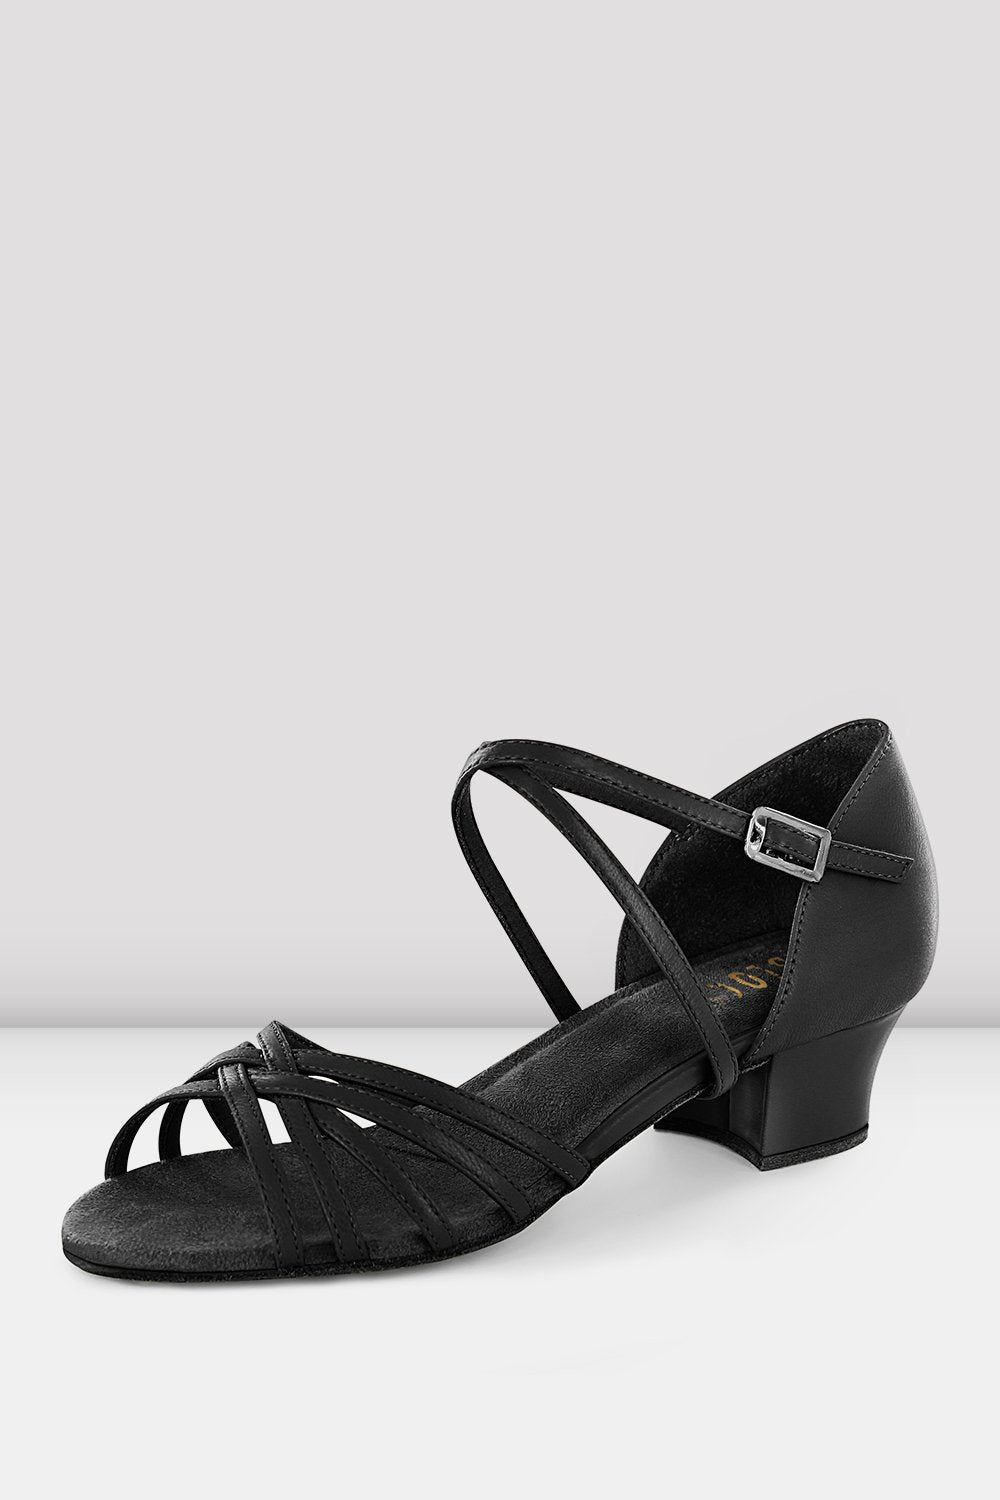 Bloch Annabella Latin black ballroom practice shoes